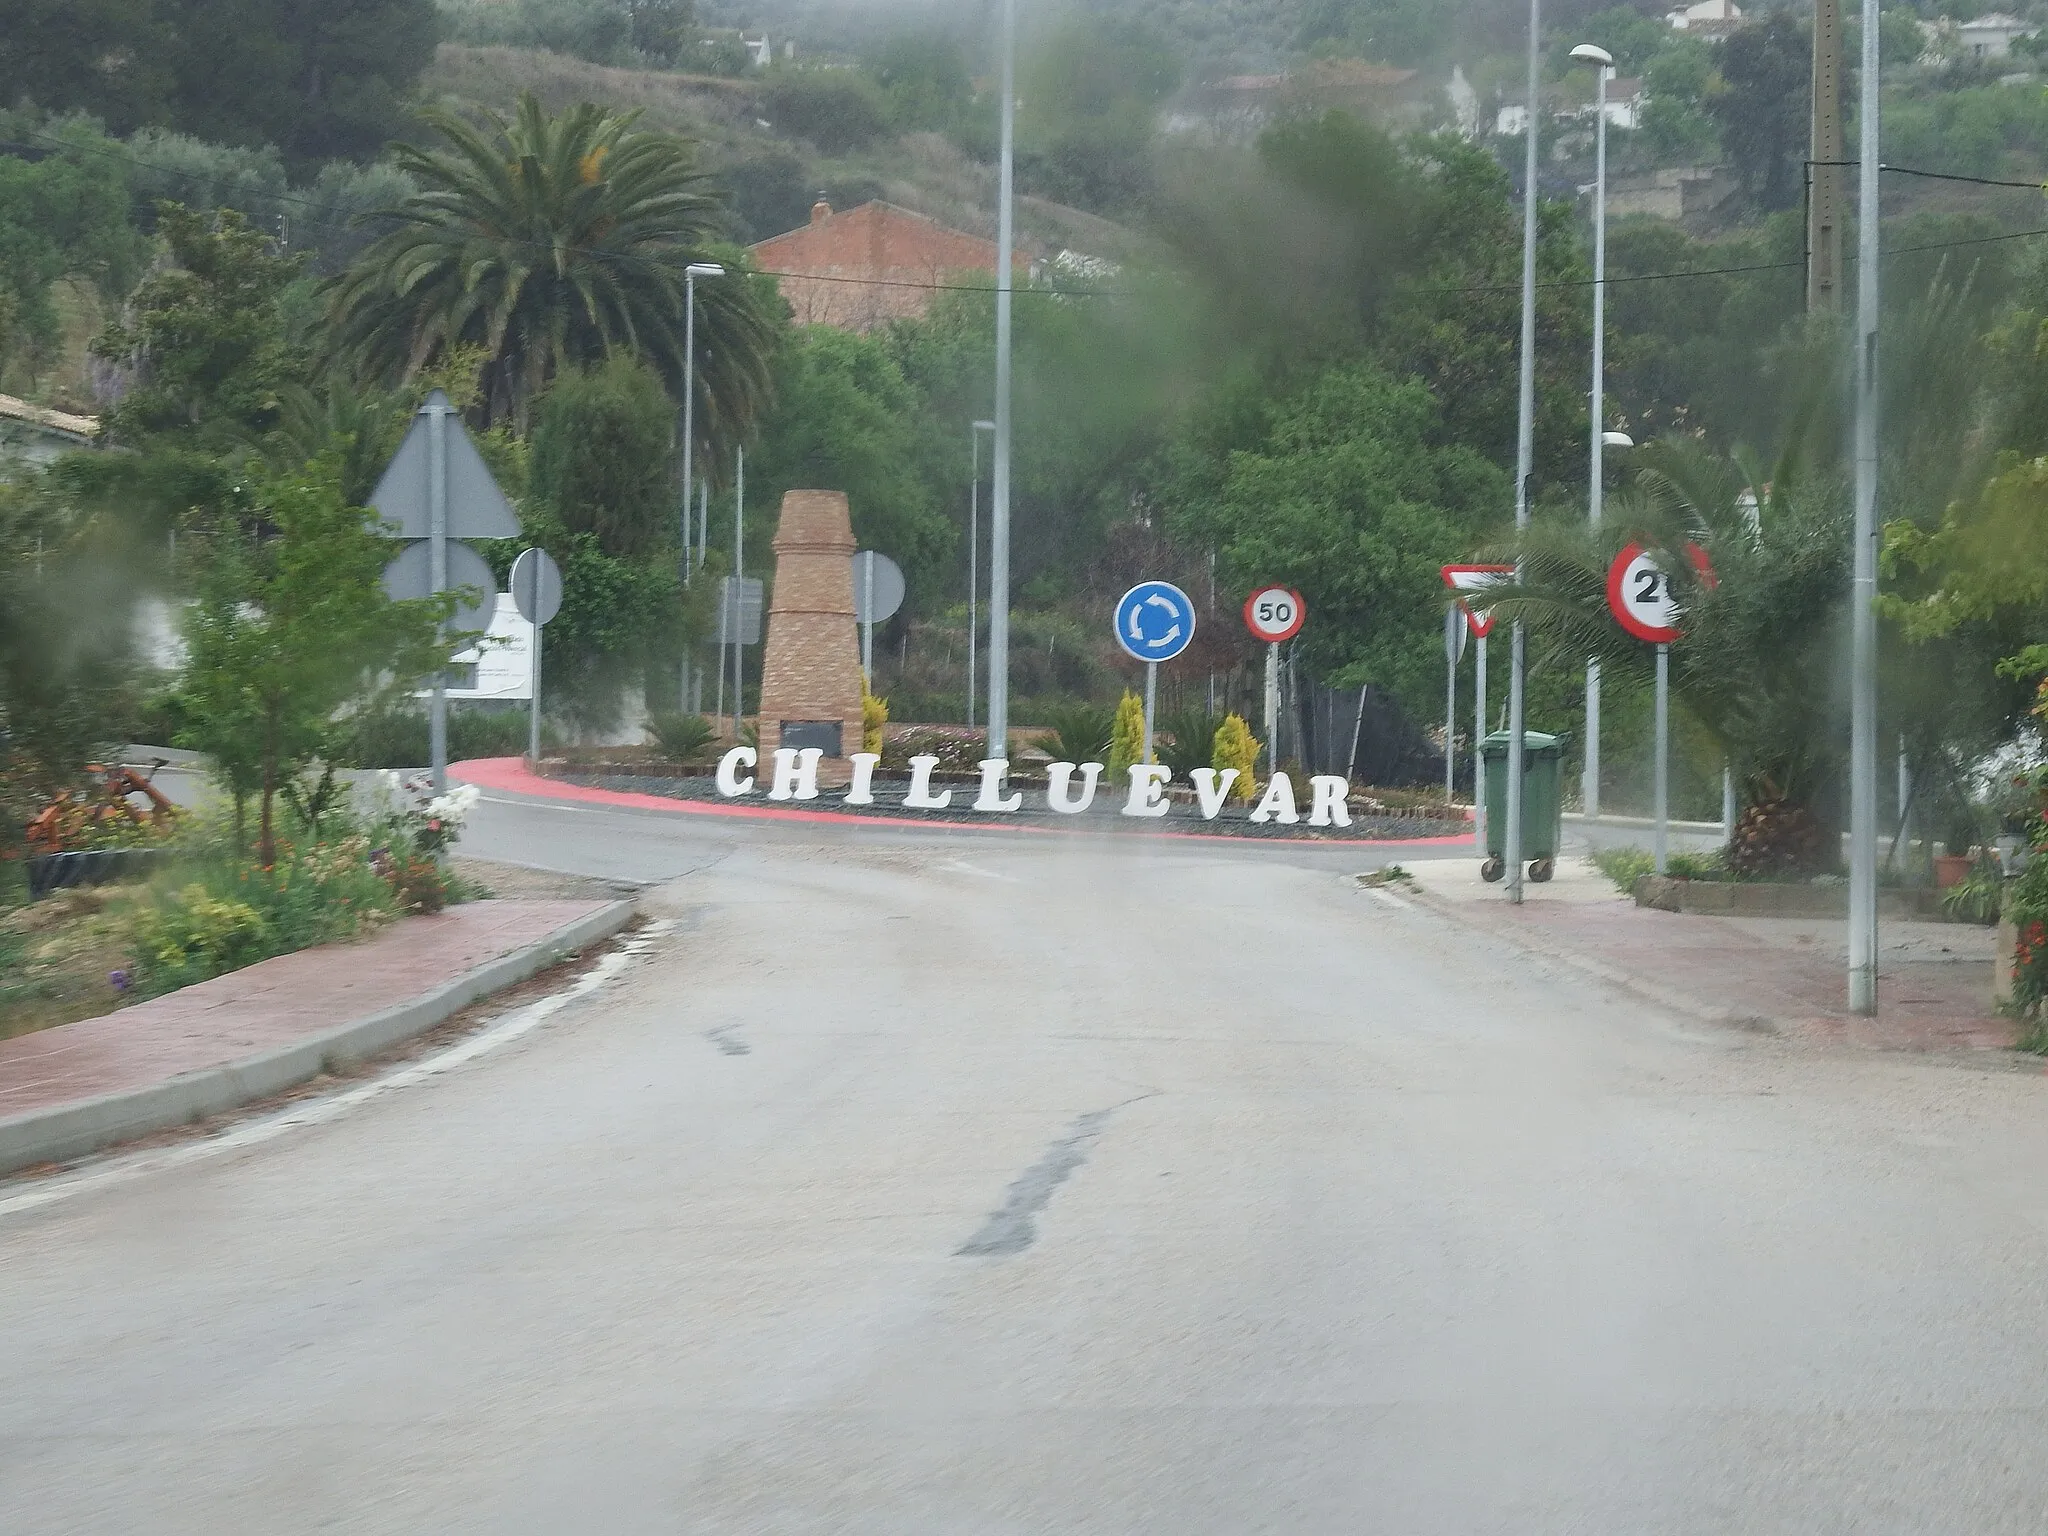 Photo showing: Chilluévar